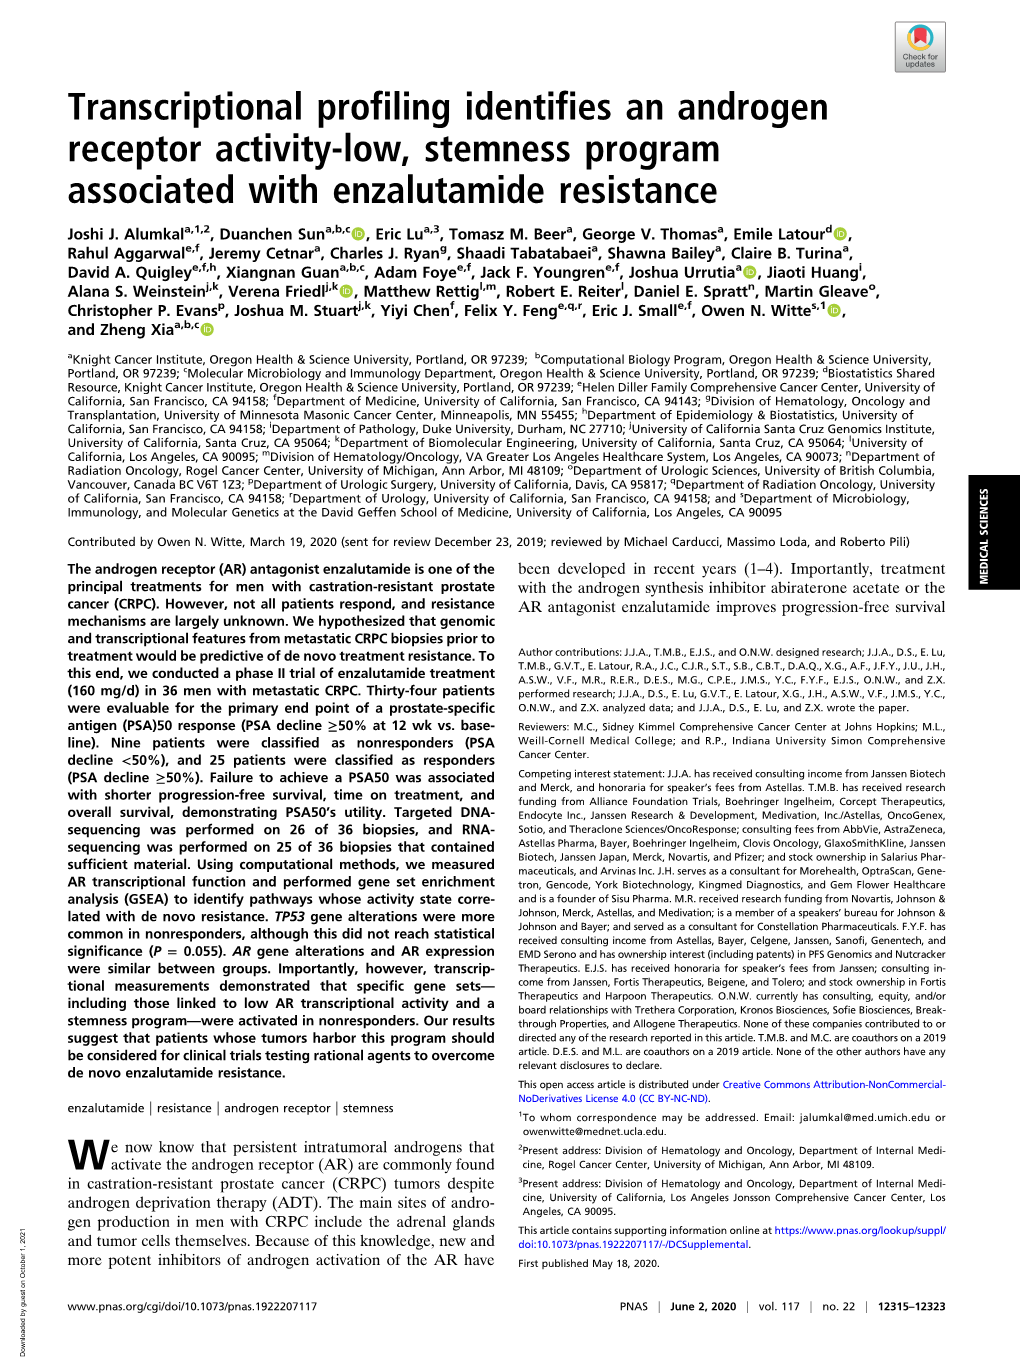 Transcriptional Profiling Identifies an Androgen Receptor Activity-Low, Stemness Program Associated with Enzalutamide Resistance